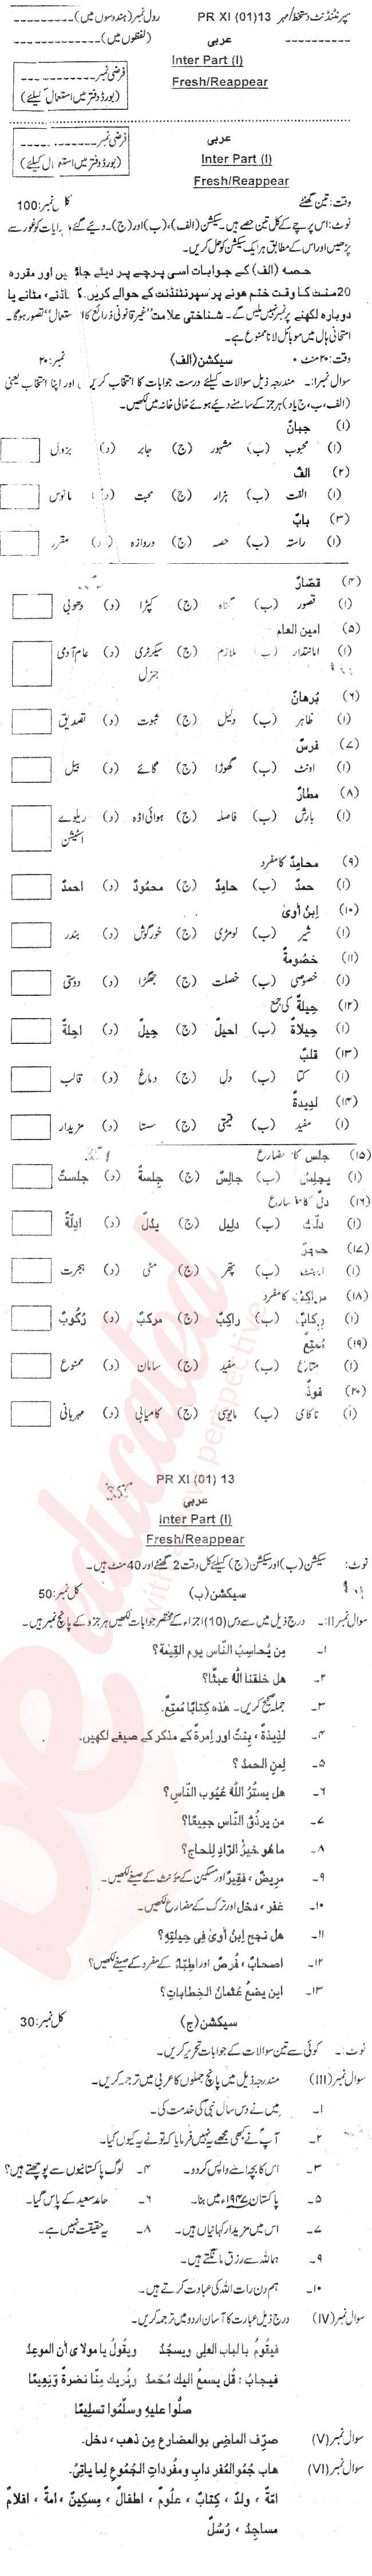 Arabic FA Part 1 Past Paper Group 1 BISE Bannu 2013